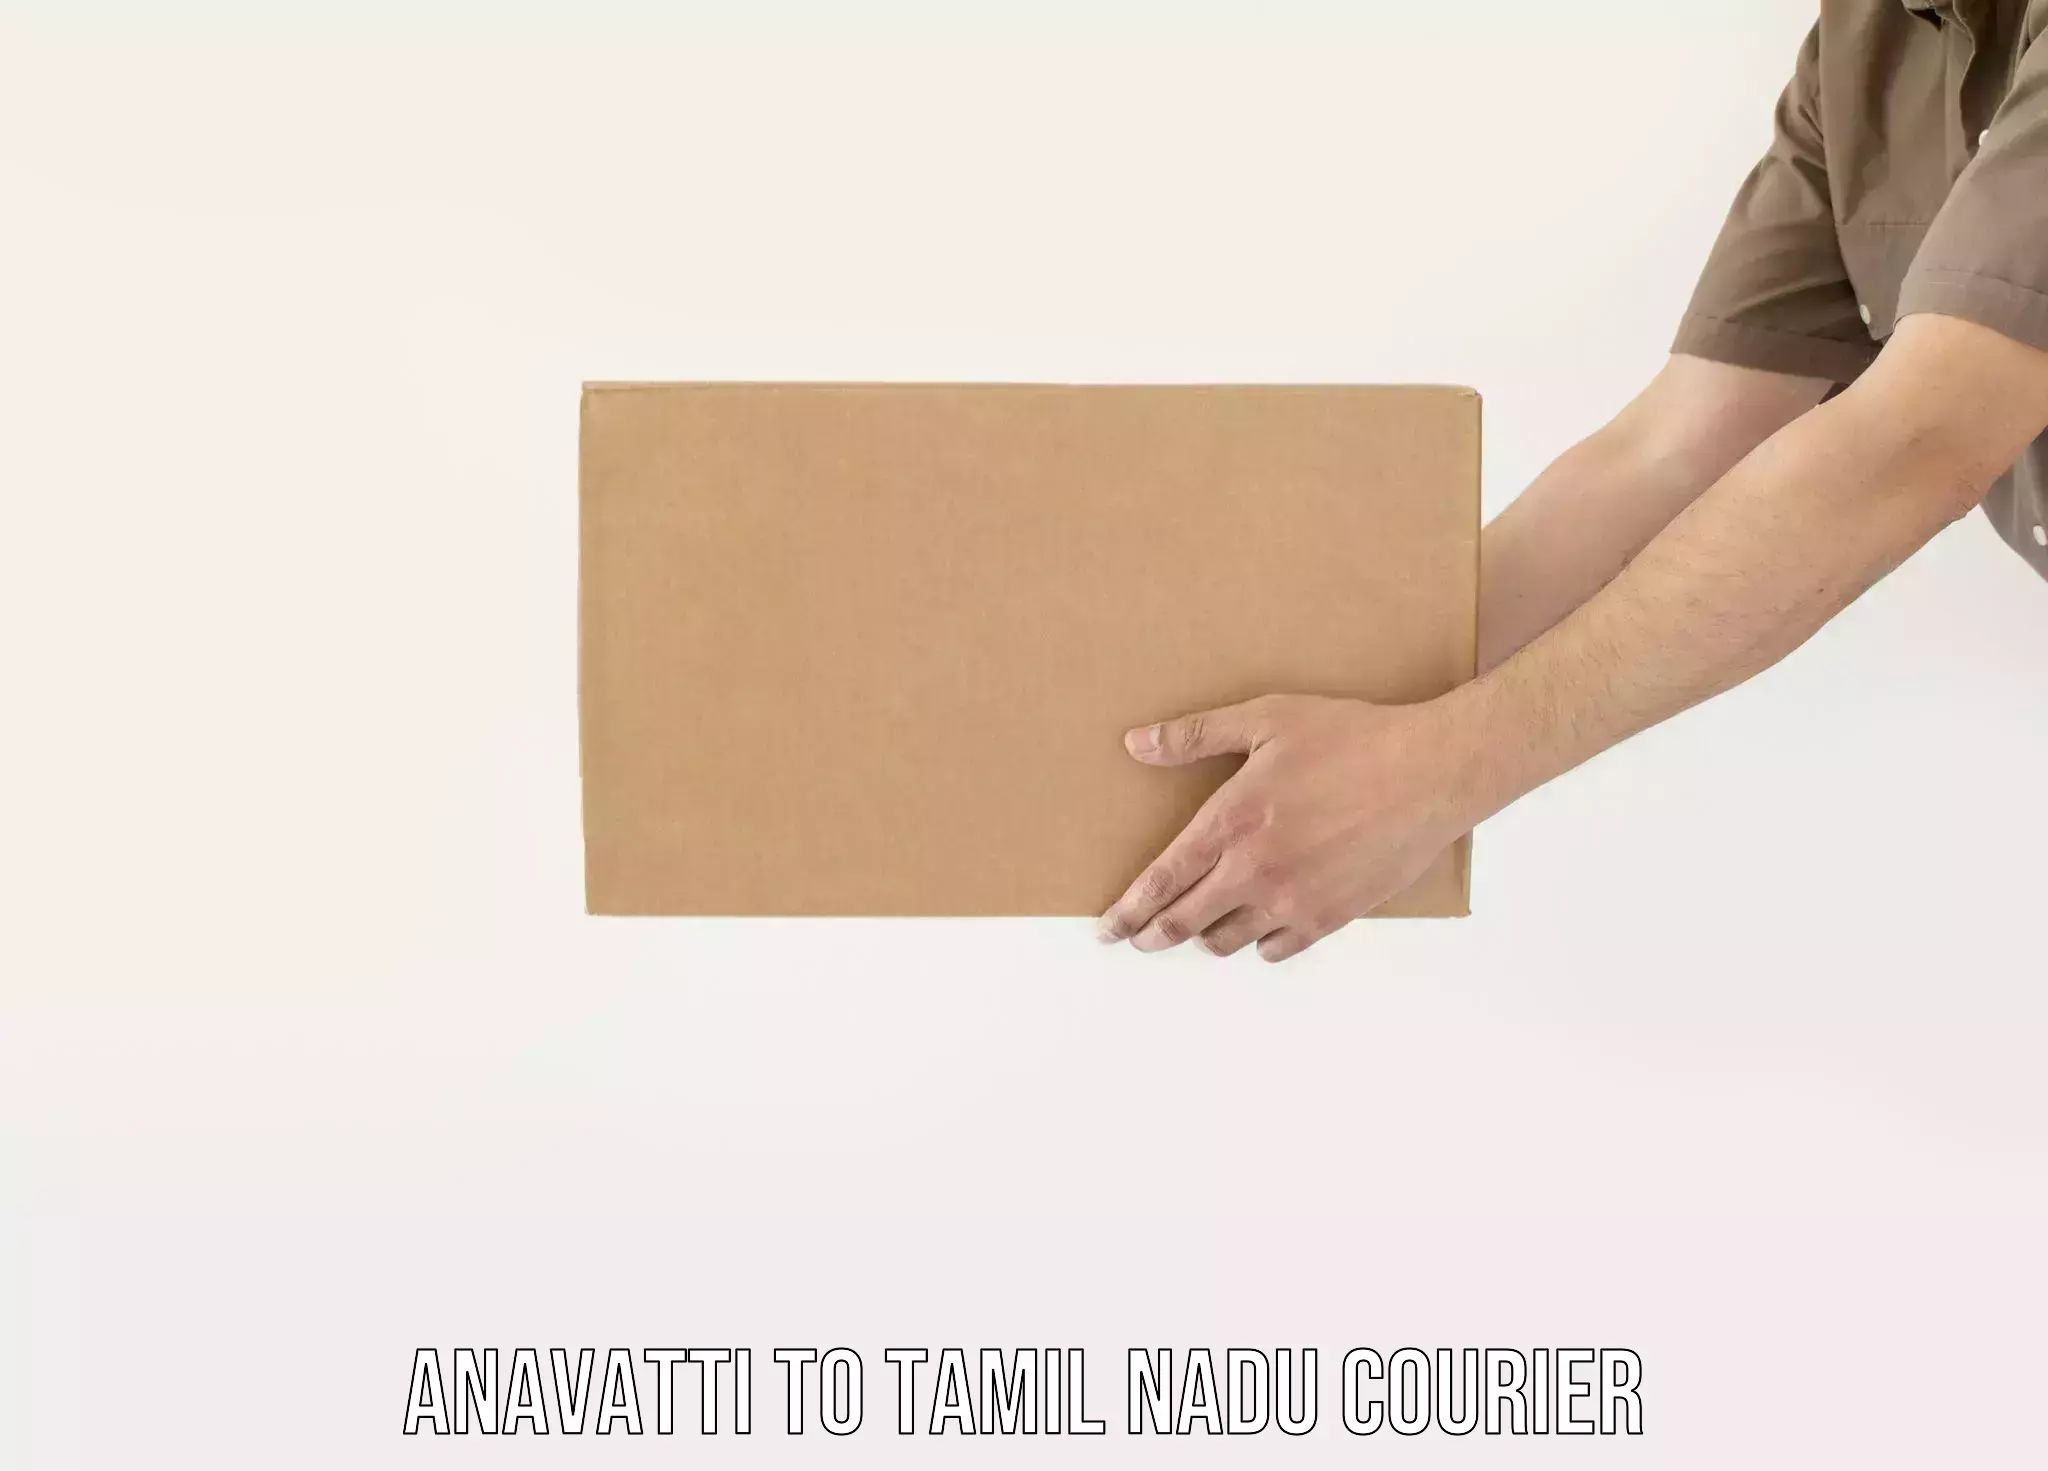 Courier service partnerships Anavatti to Tamil Nadu